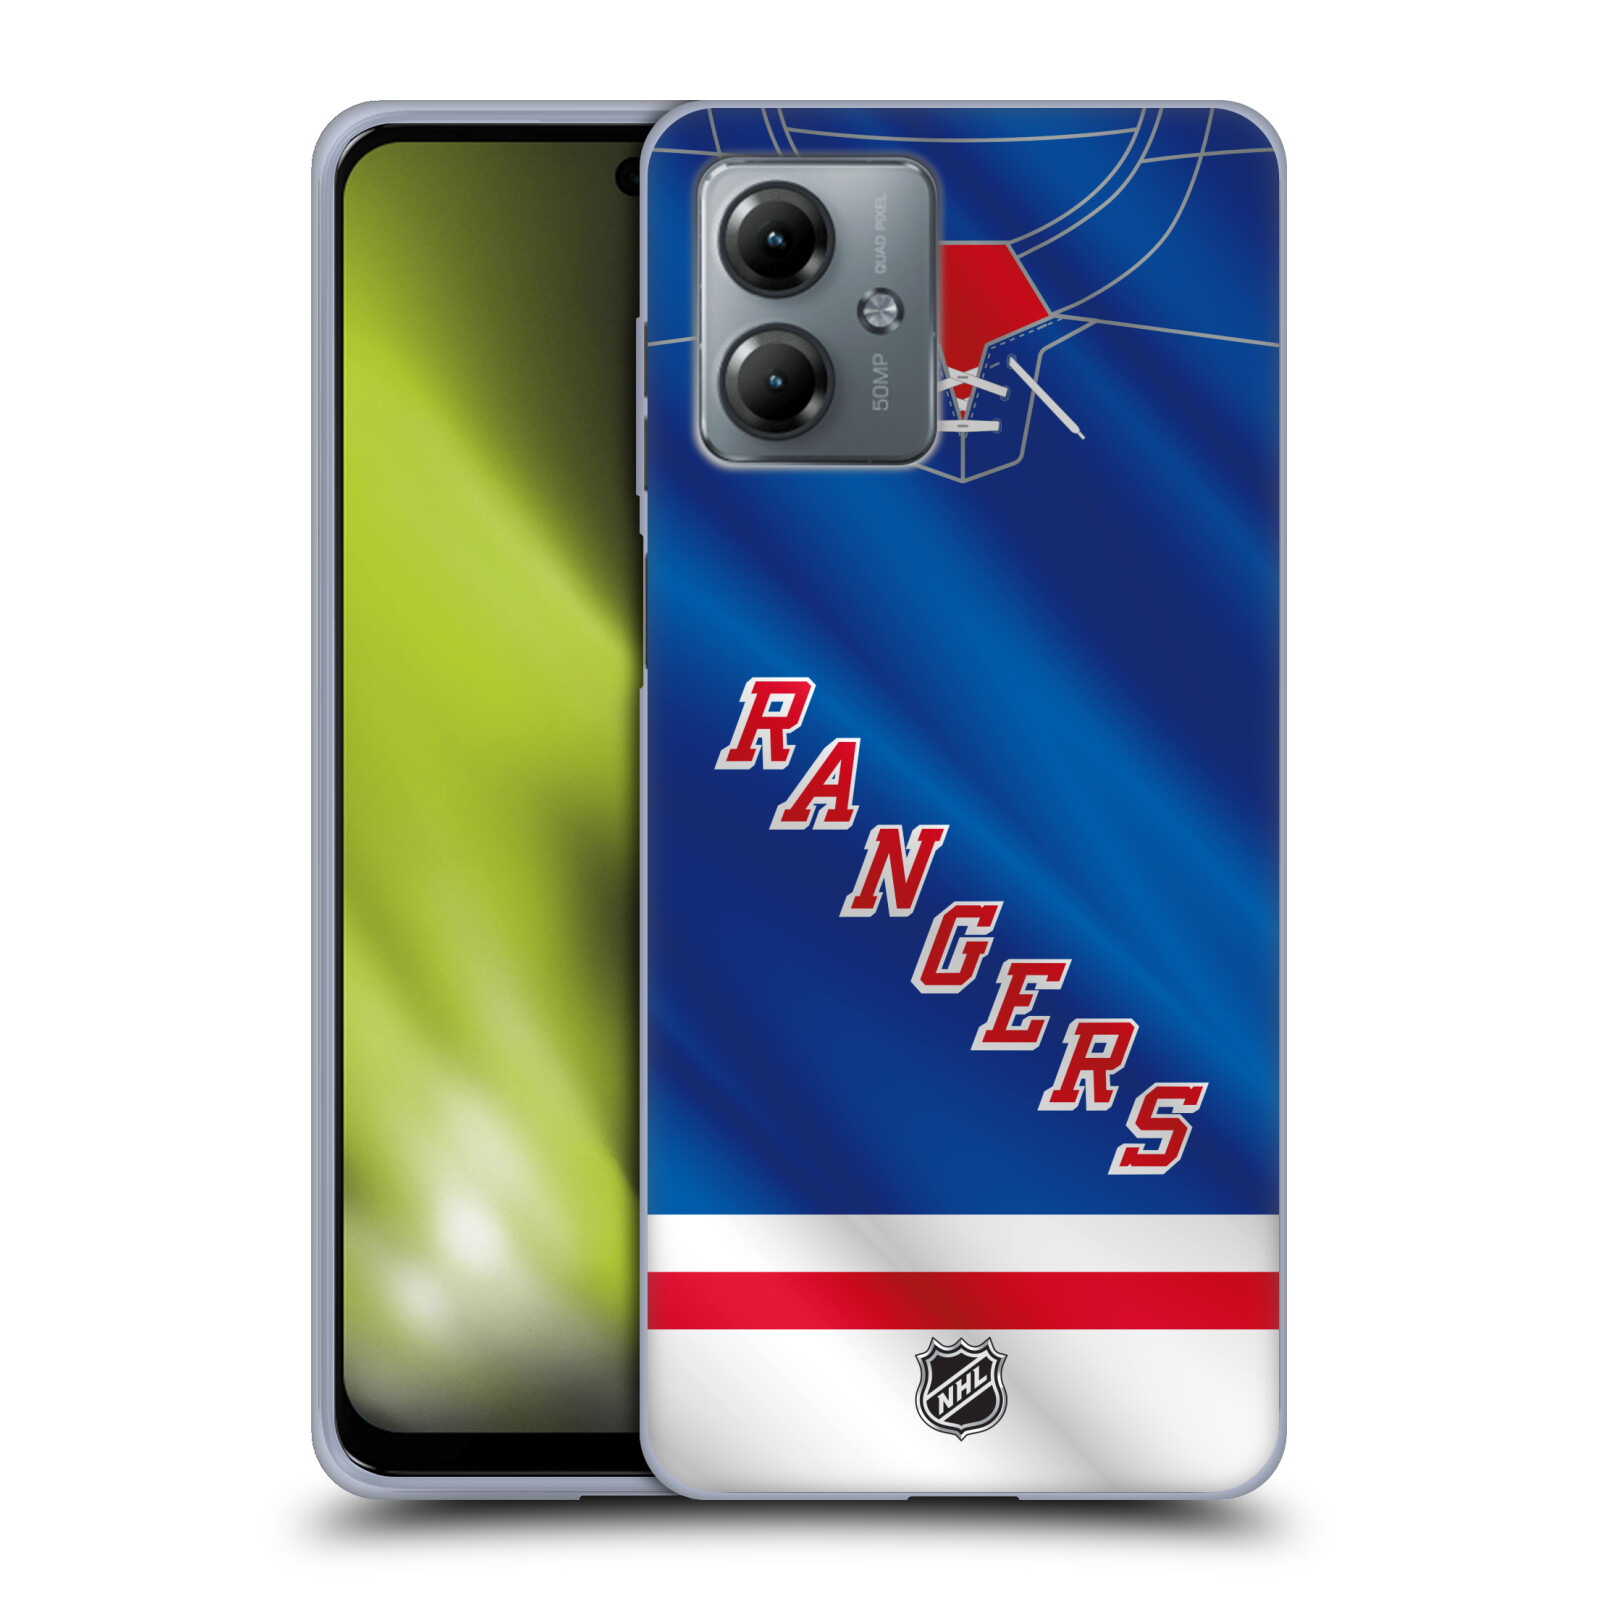 Silikonové pouzdro na mobil Motorola Moto G14 - NHL - Dres New York Rangers (Silikonový kryt, obal, pouzdro na mobilní telefon Motorola Moto G14 s licencovaným motivem NHL - Dres New York Rangers)